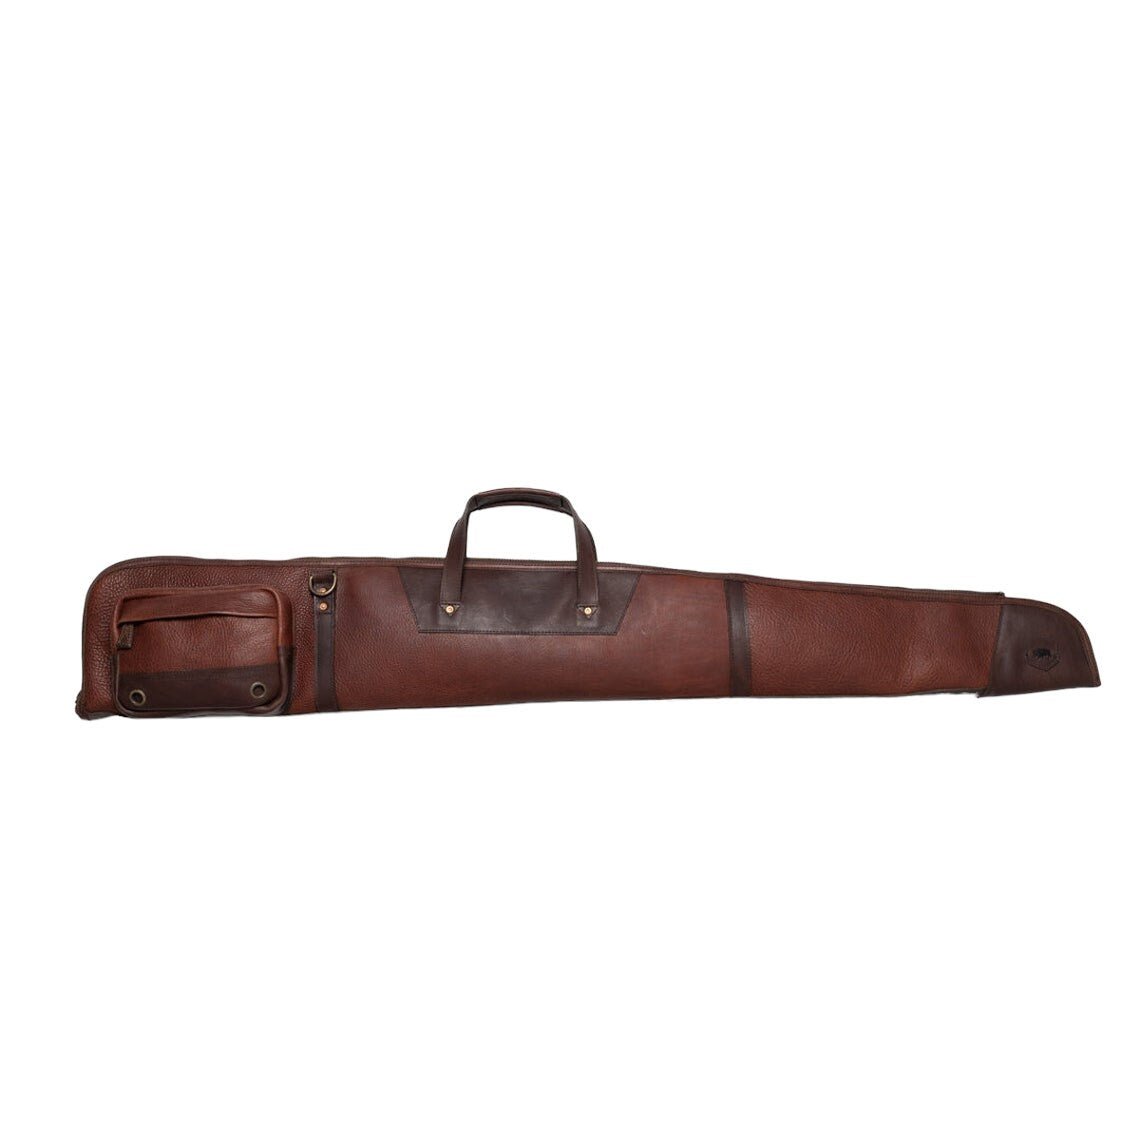 40 inch to 60 inch | Handmade | Leather Shotgun Bag | Leather Shotgun Case |  Hunting | Hunting Gear  |  Gun case  | Personalization  99percenthandmade   